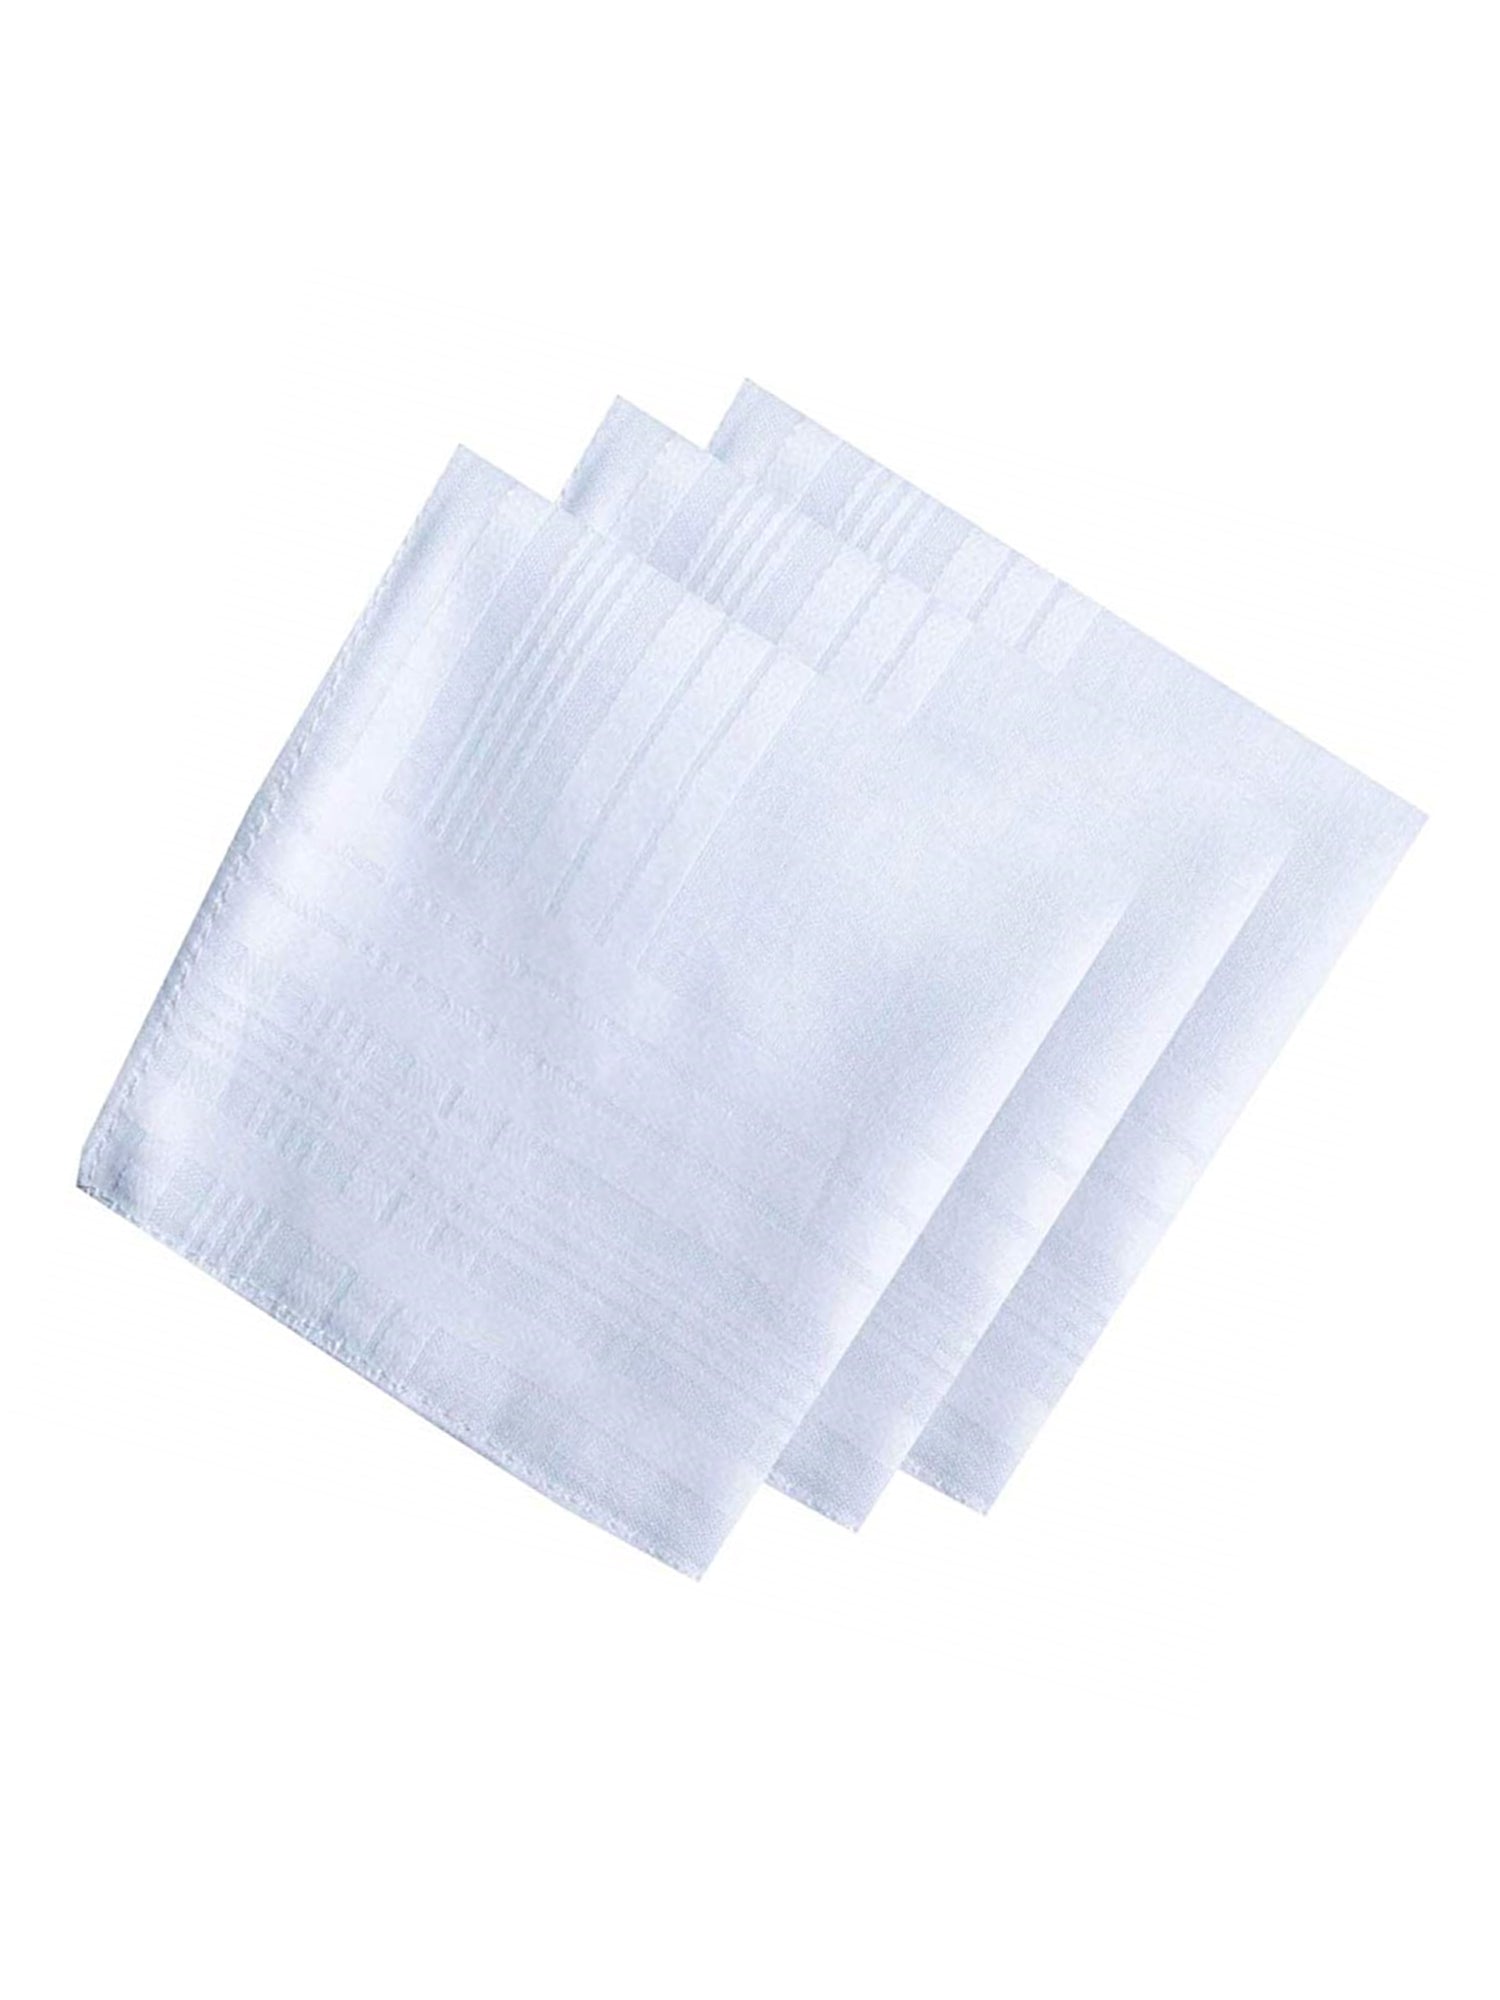 Men's White 100% Cotton Soft Finish Handkerchiefs Prefolded Pocket Squares UMO LORENZO 3 Pieces - White Regular 